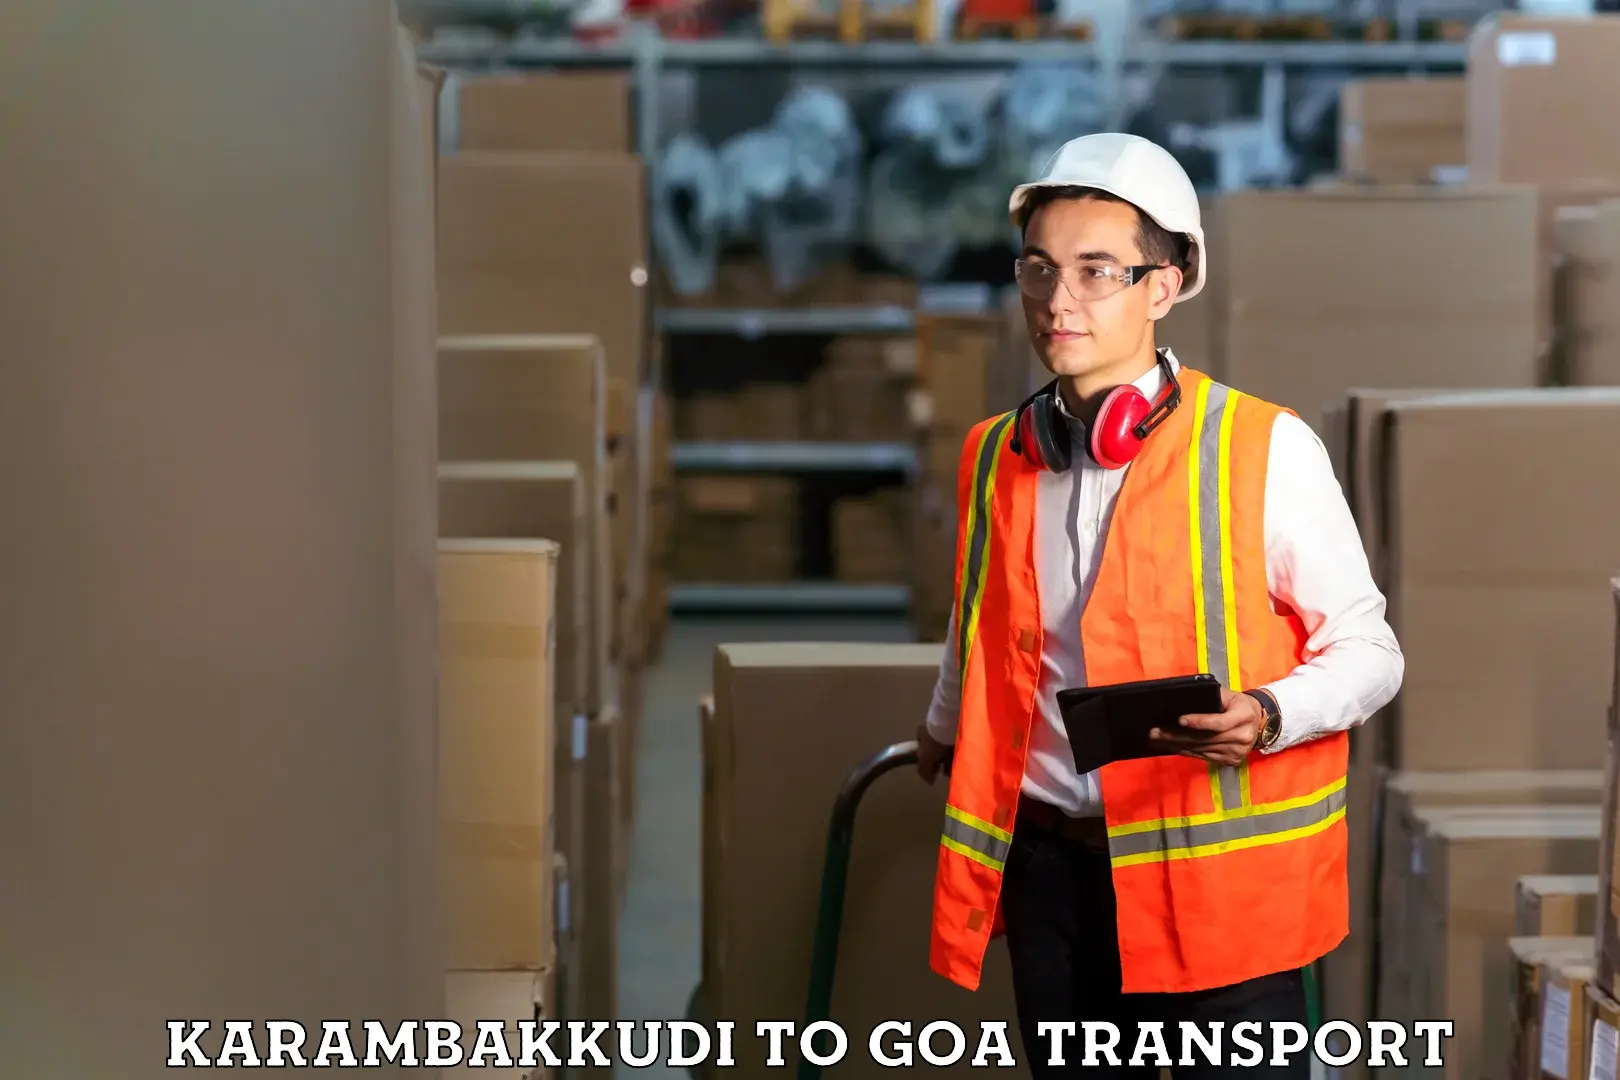 Goods delivery service Karambakkudi to Goa